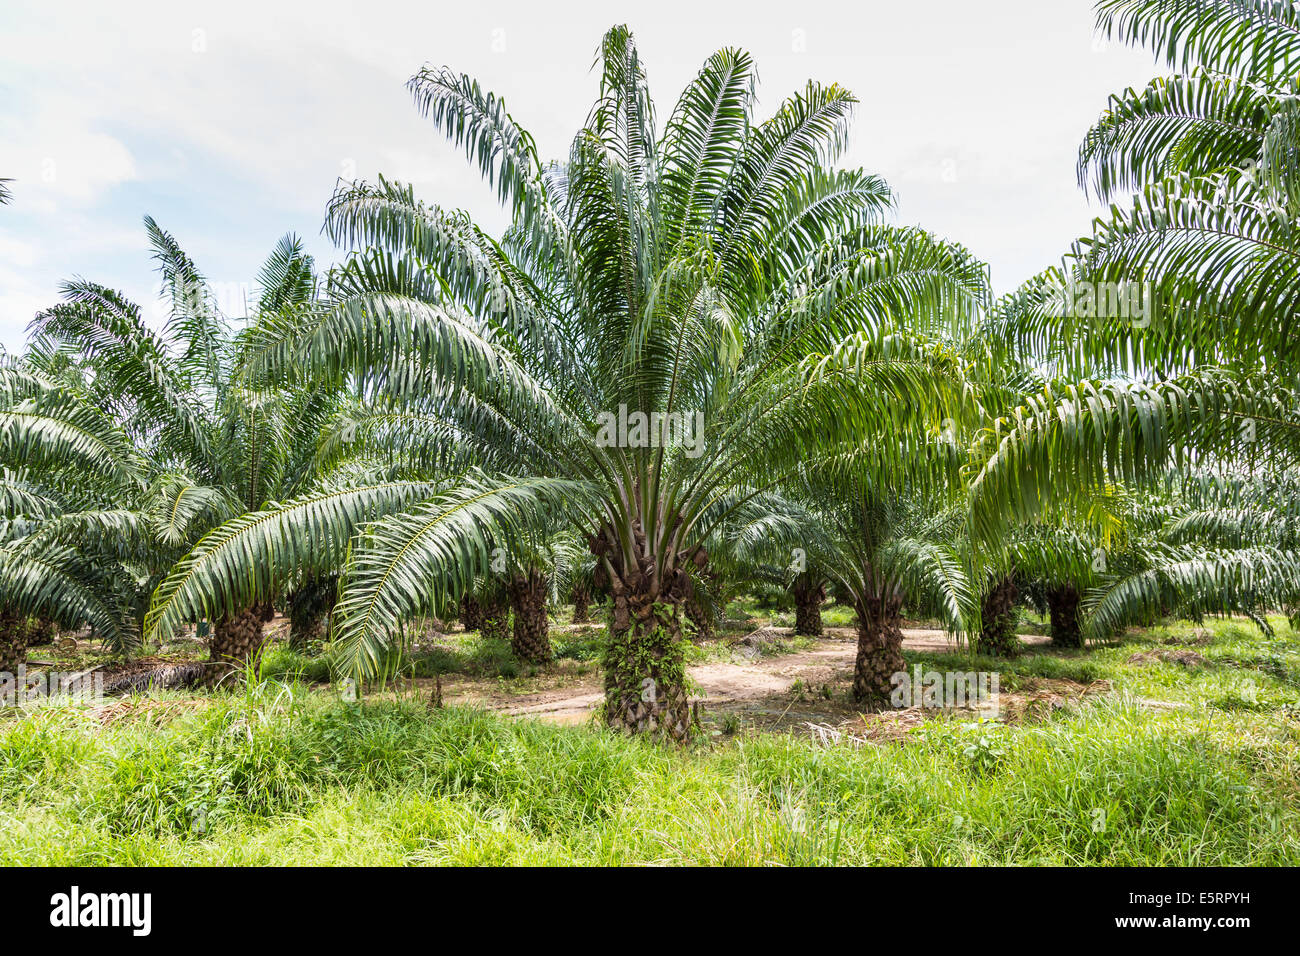 Oil palm trees (Elaeis guineensis) in a plantation, Guatemala. Stock Photo